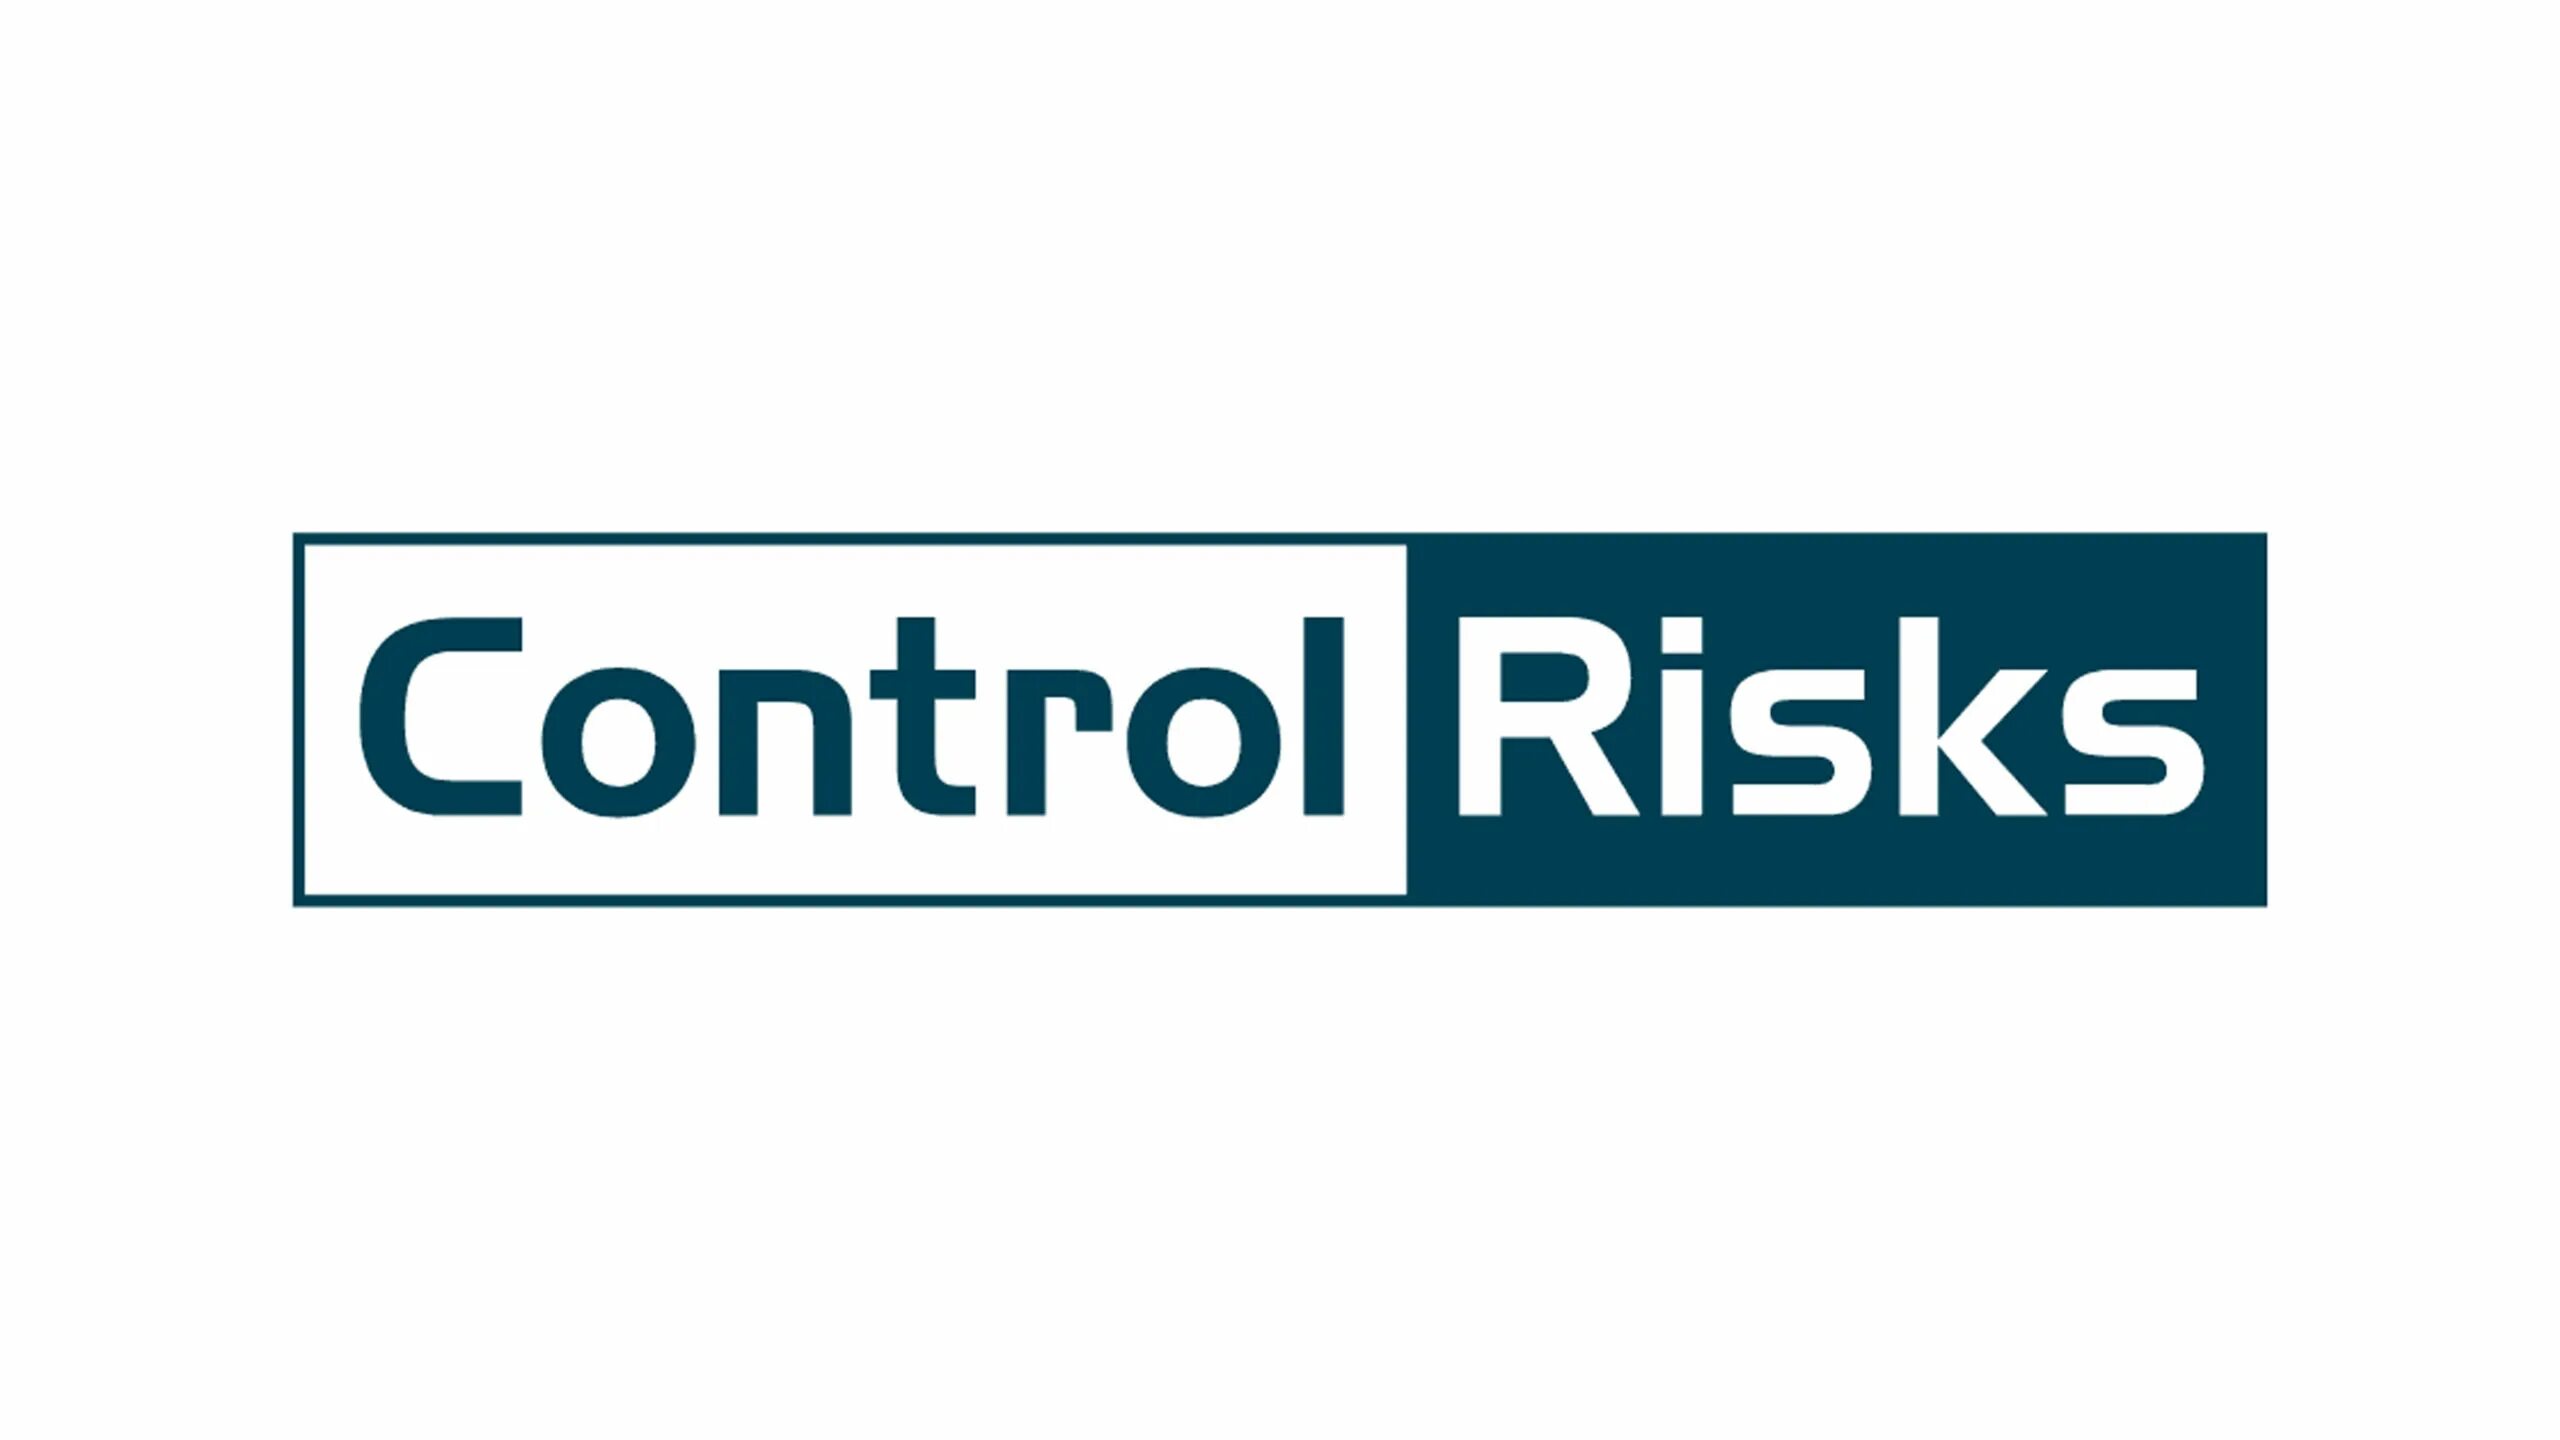 Risk Control. Control risks Россия. Фирма Control. Risk Control картинки. Risk controlling